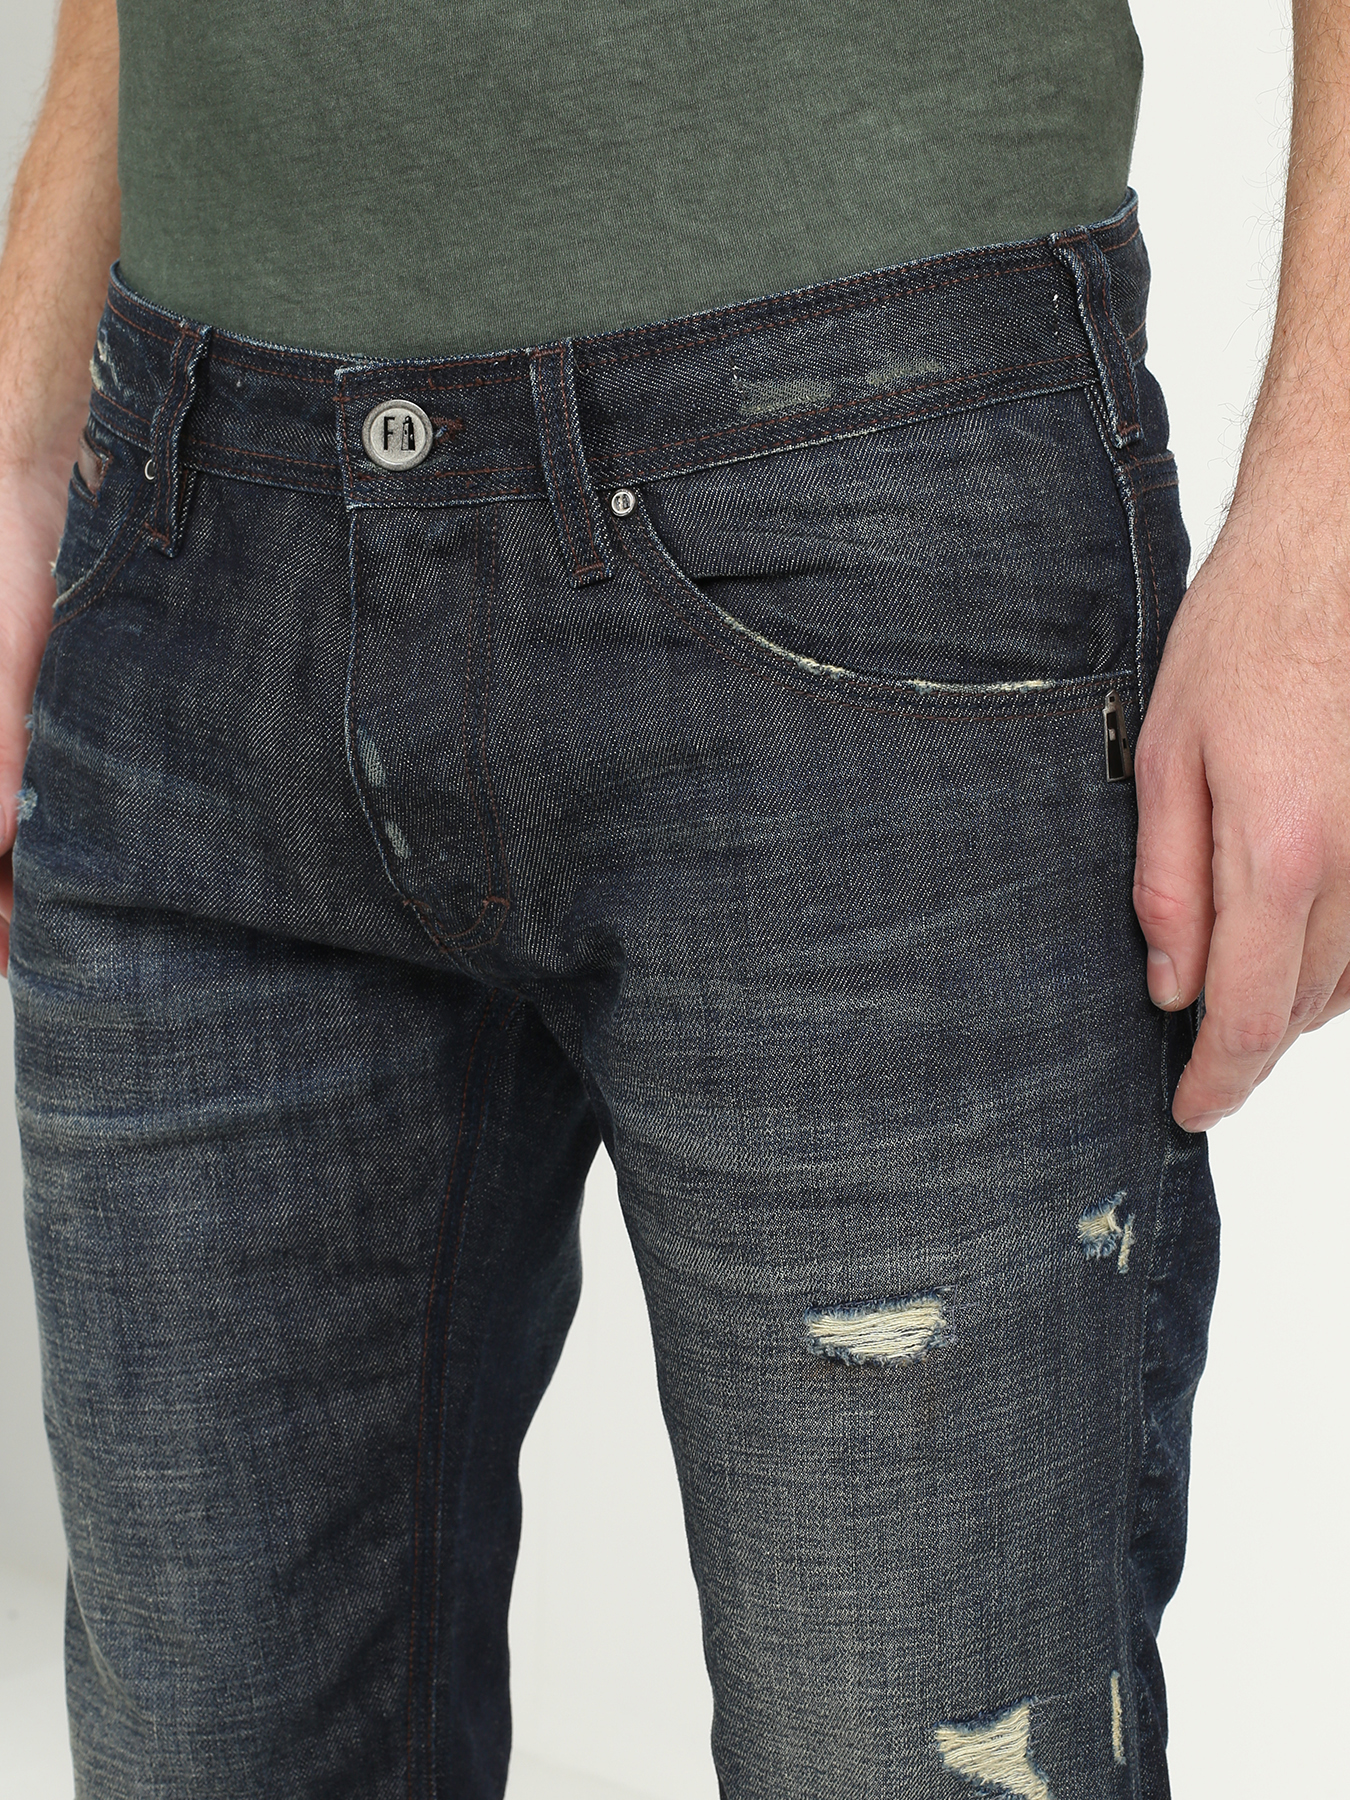 Finisterre Мужские джинсы 323204-017 Фото 3